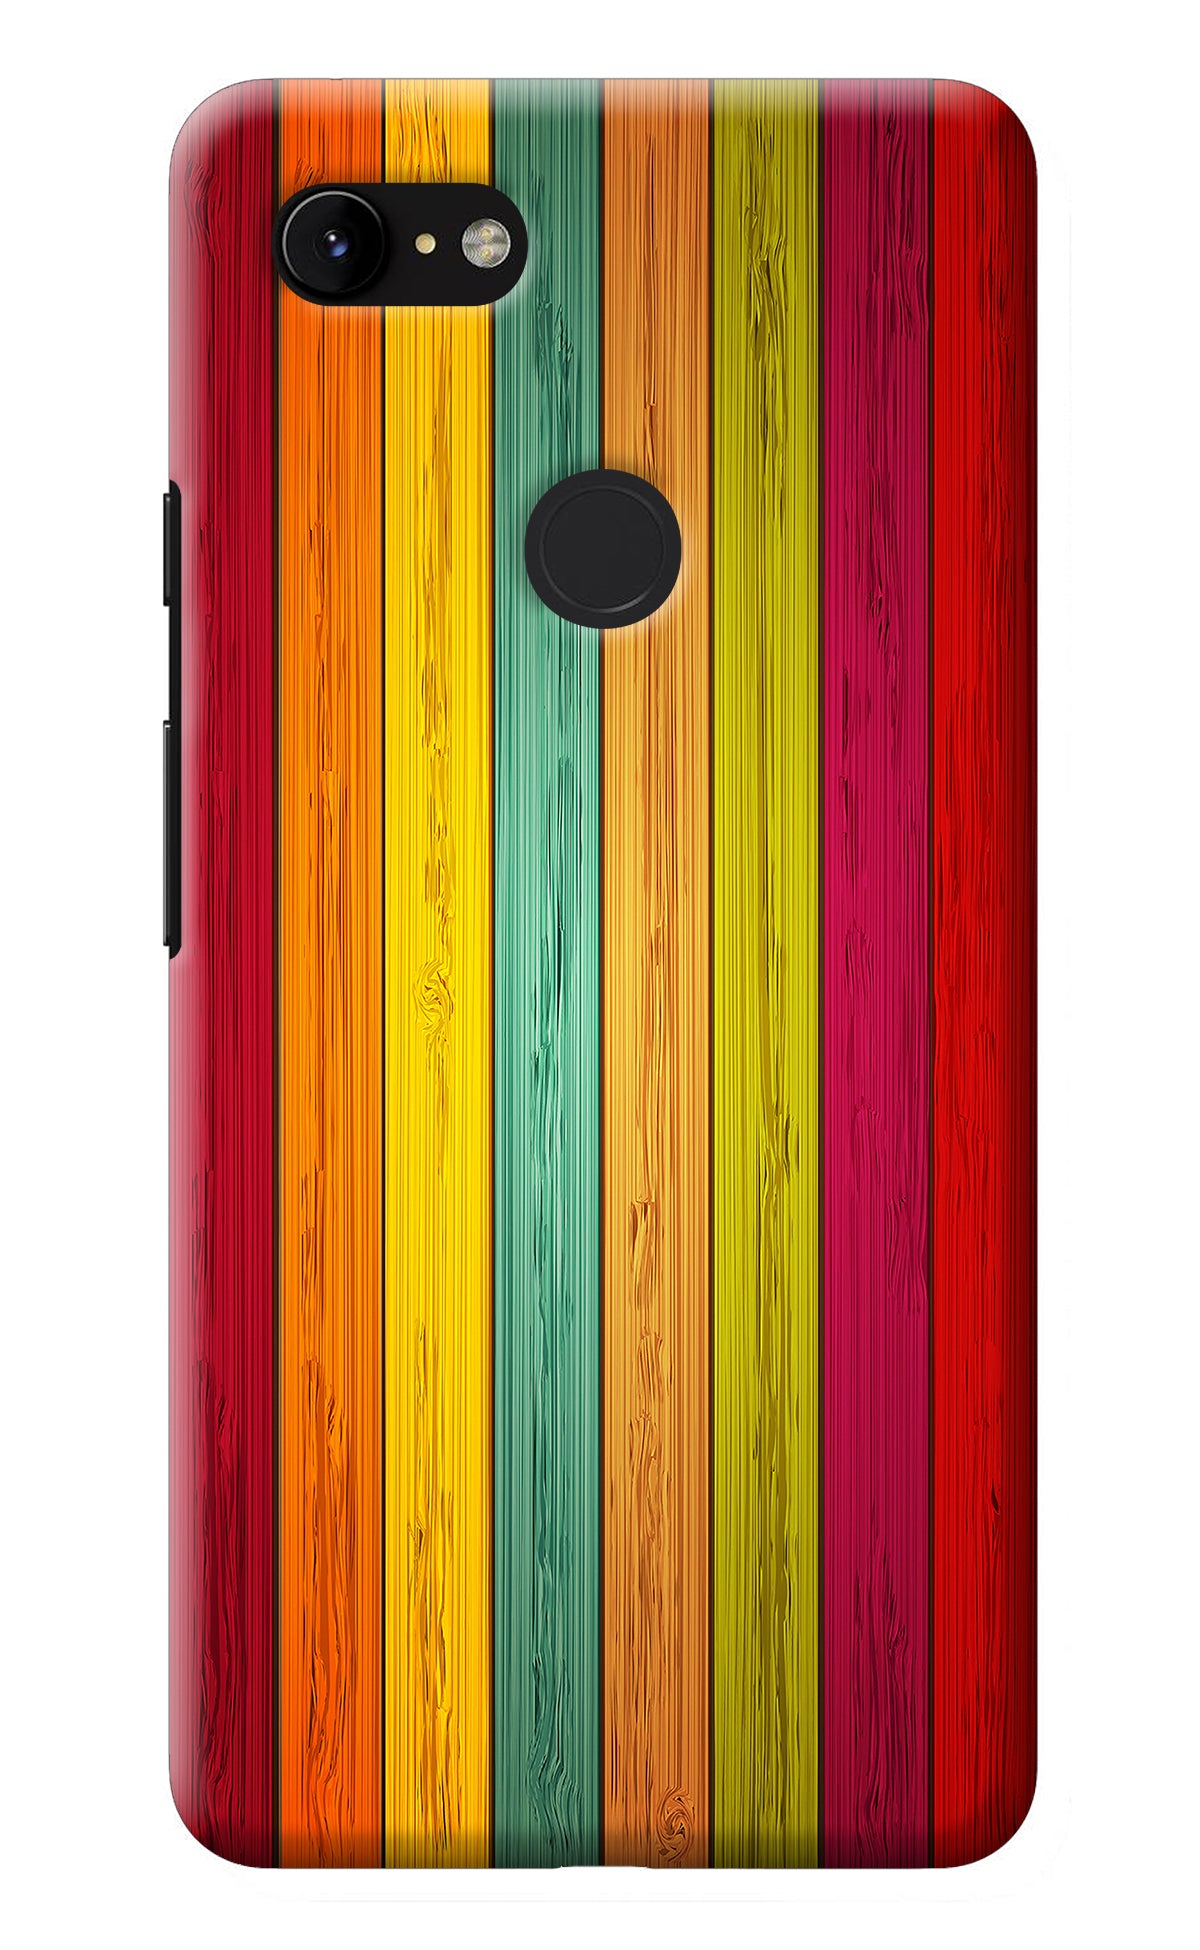 Multicolor Wooden Google Pixel 3 XL Back Cover